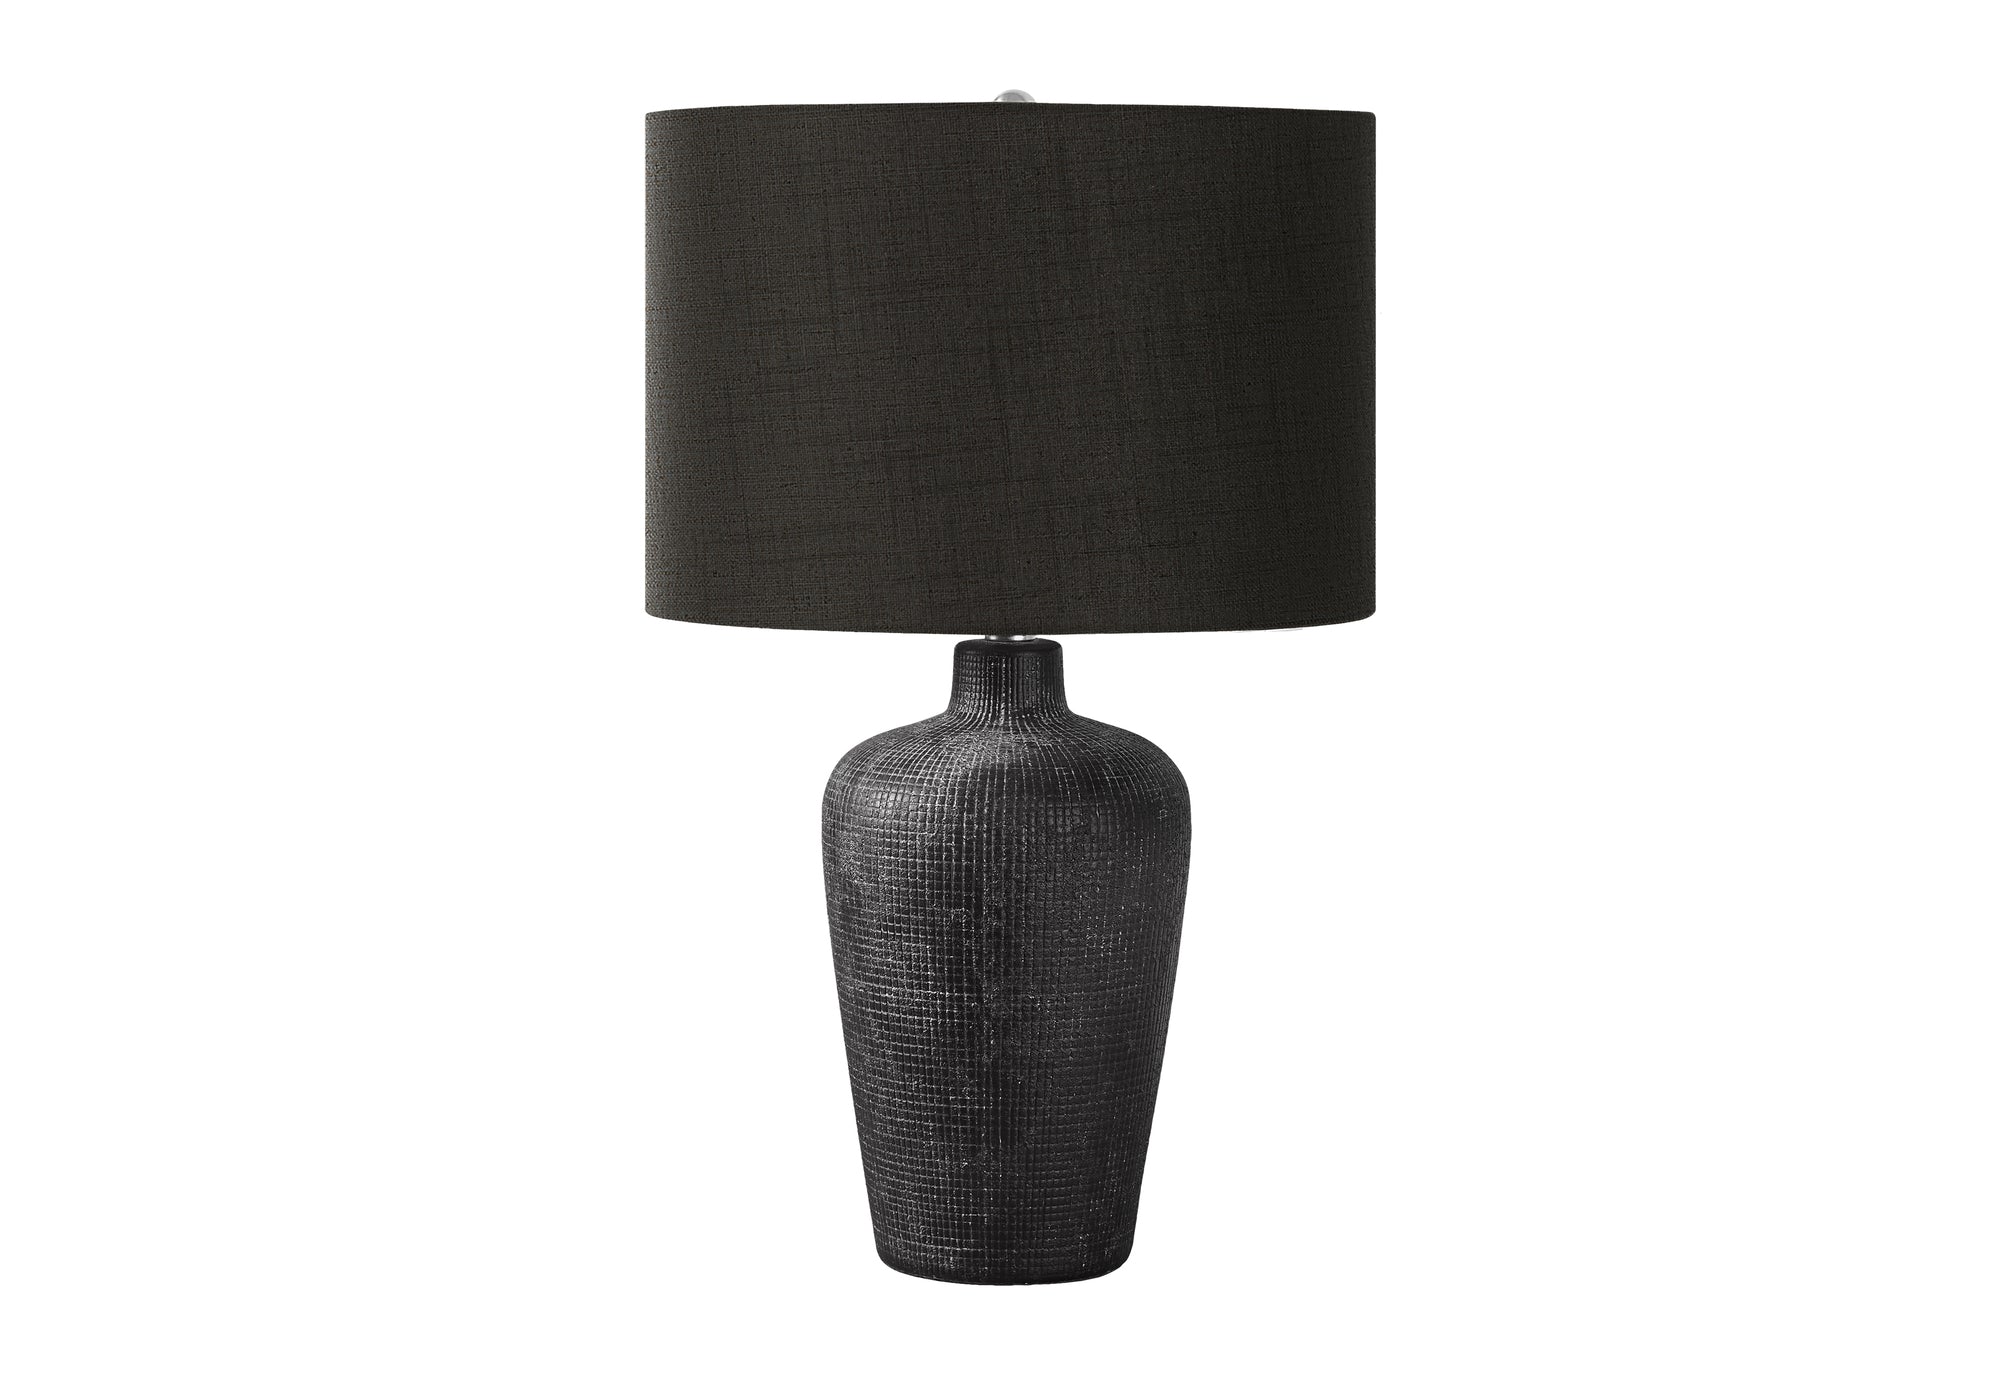 MN-949621    Lighting, Table Lamp, 24"H, Black Ceramic, Black Shade, Contemporary